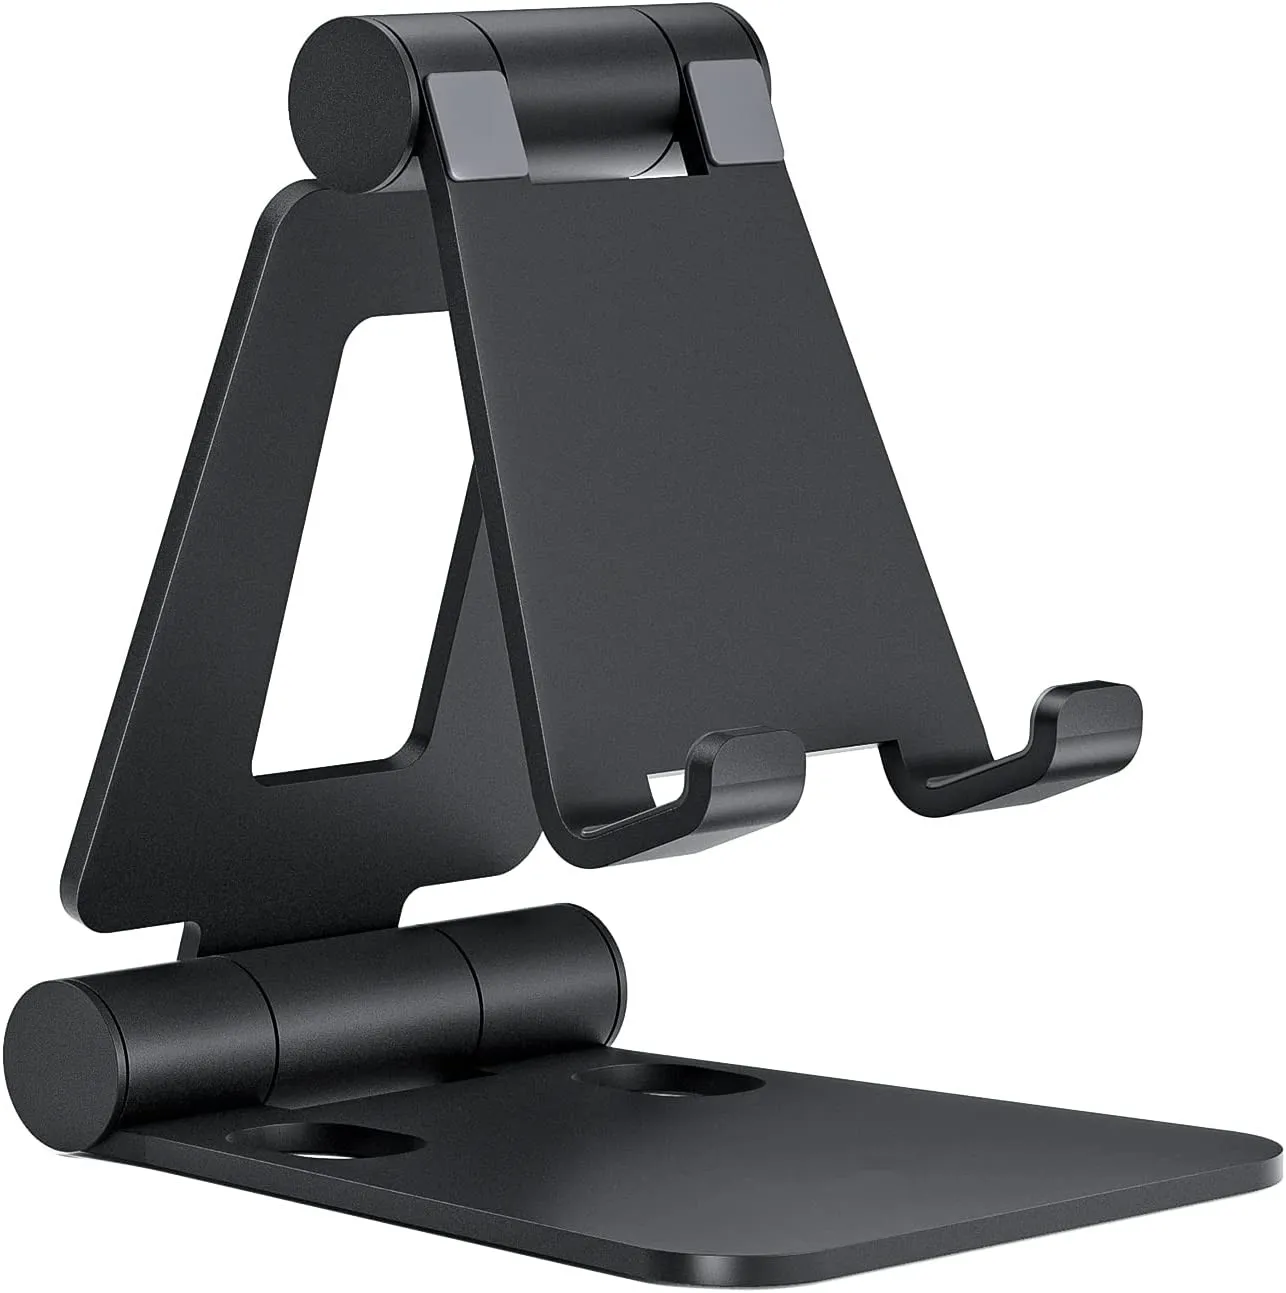 

Ergonomic Folding Cell Phone Stand Fully Adjustable Foldable Desktop Phone Holder Cradle Dock